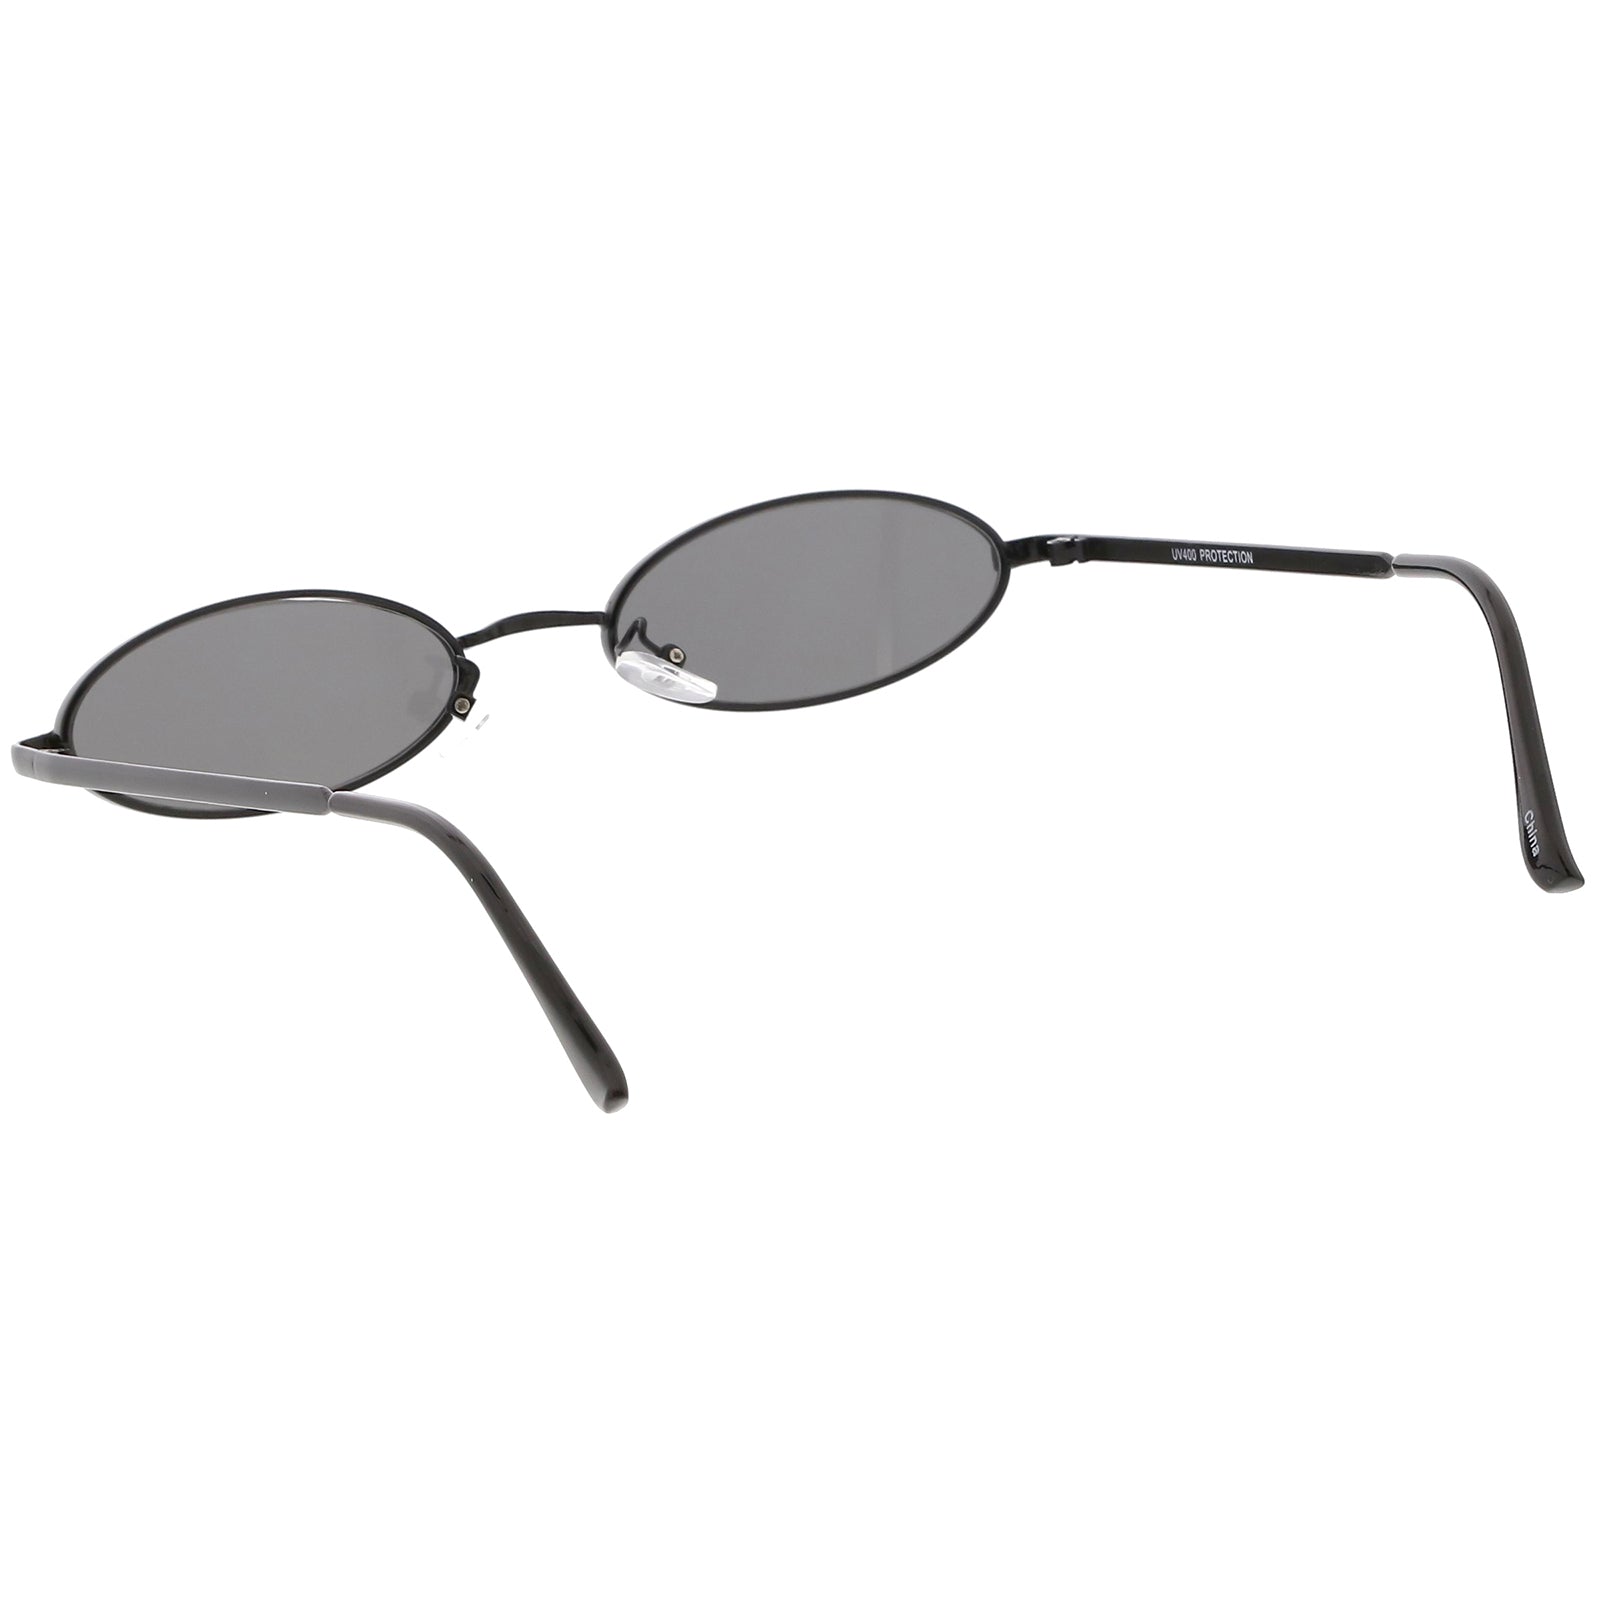 Retro 1990s Small Oval Metal Flat Lens Sunglasses Zerouv 